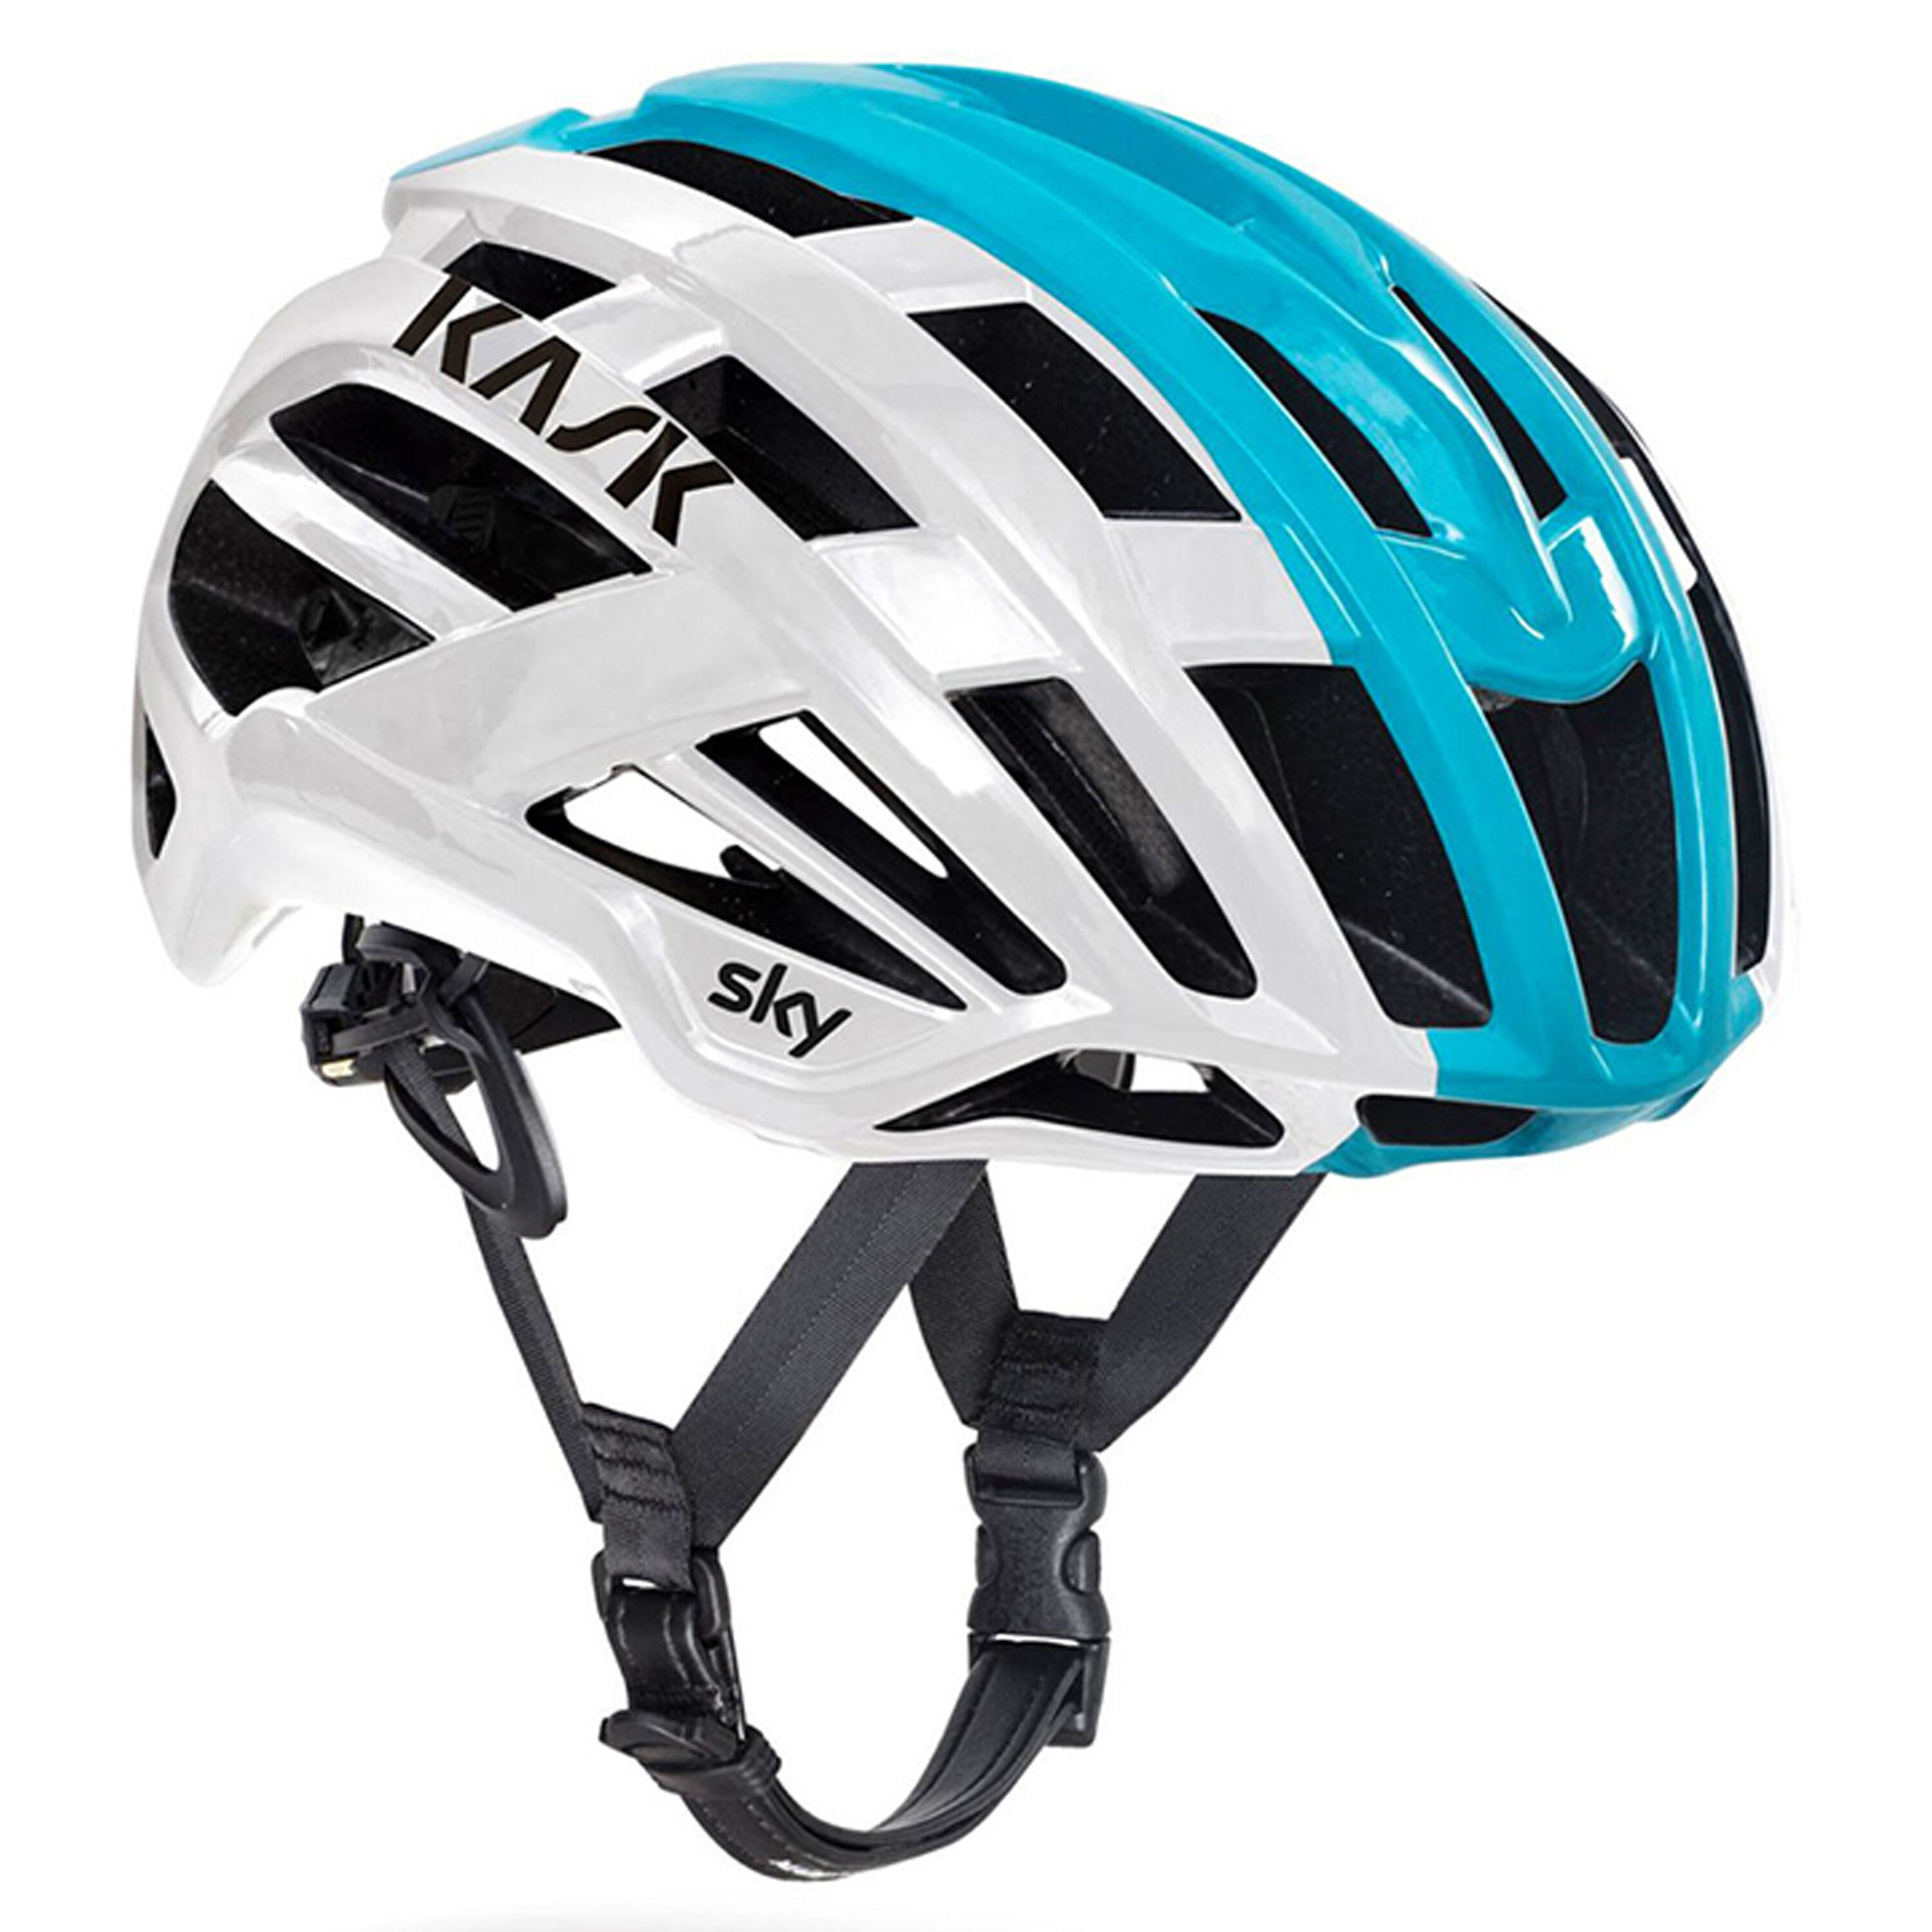 Kask Valegro Team Sky helmet LordGun bike store